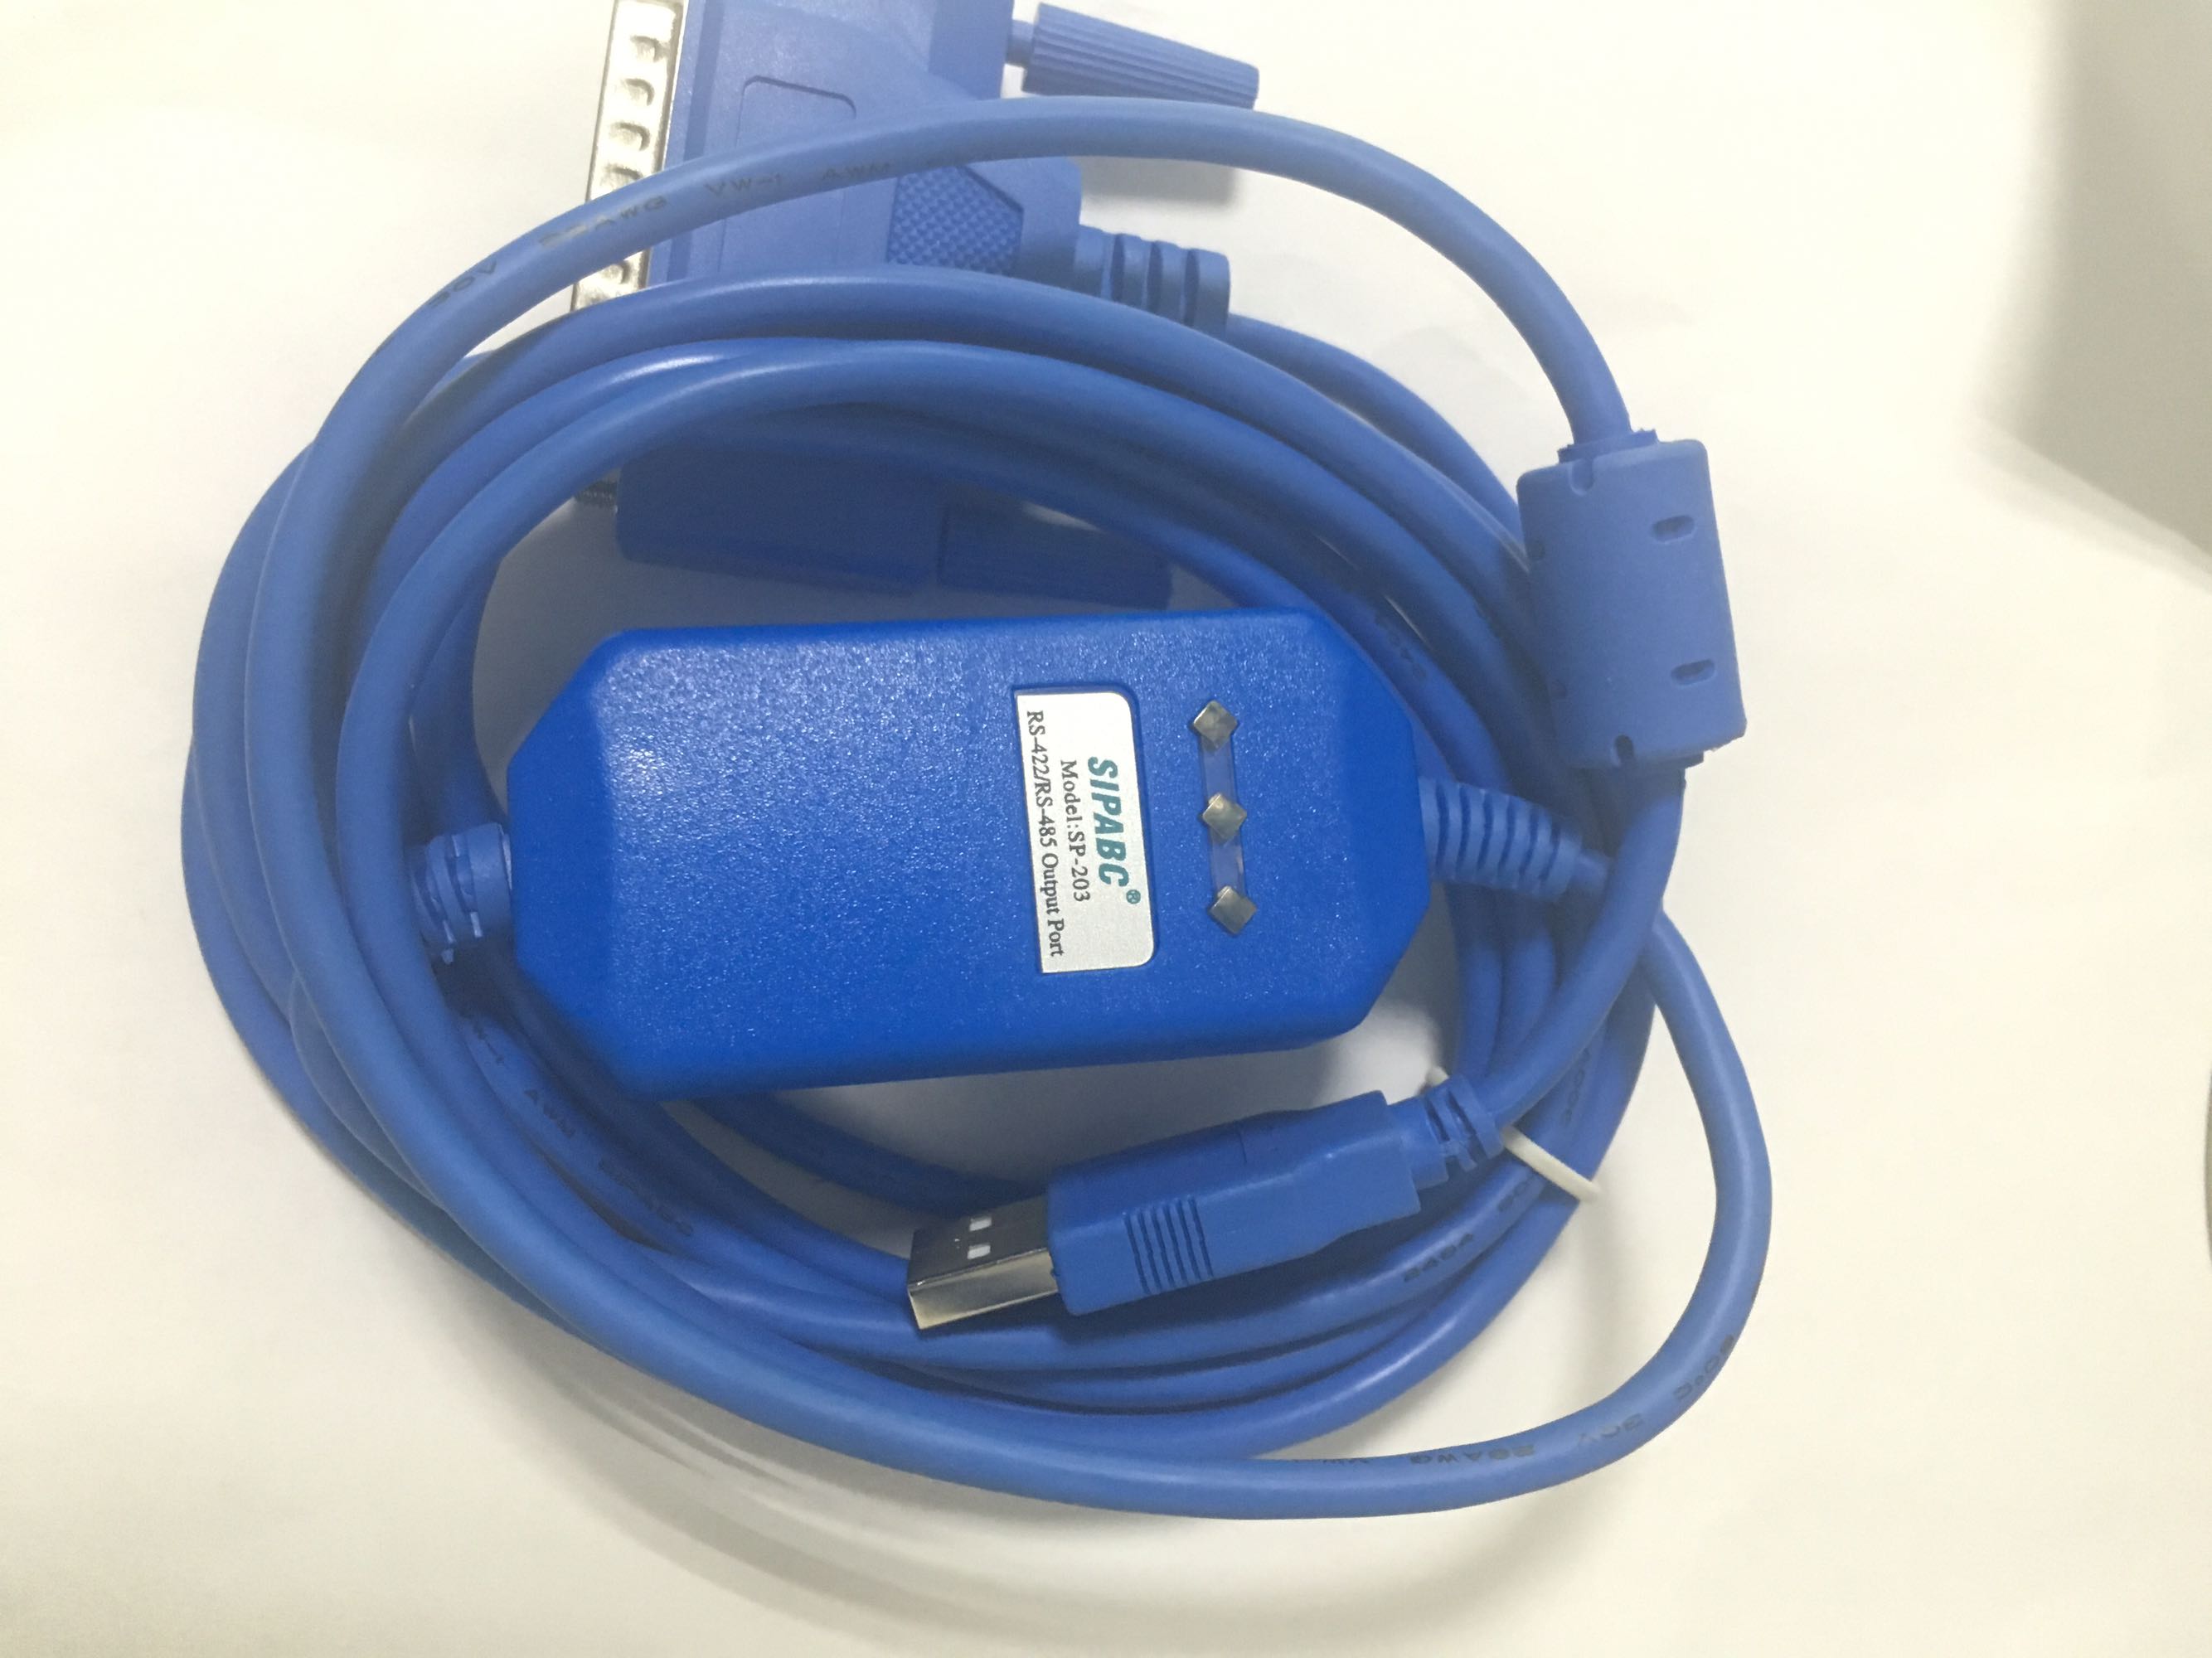 USB-FANUC FTDI Chip USB-DB25M or RS232 Programming Cable 25-Pin for FANUC CNC DNC: USB-DB25M